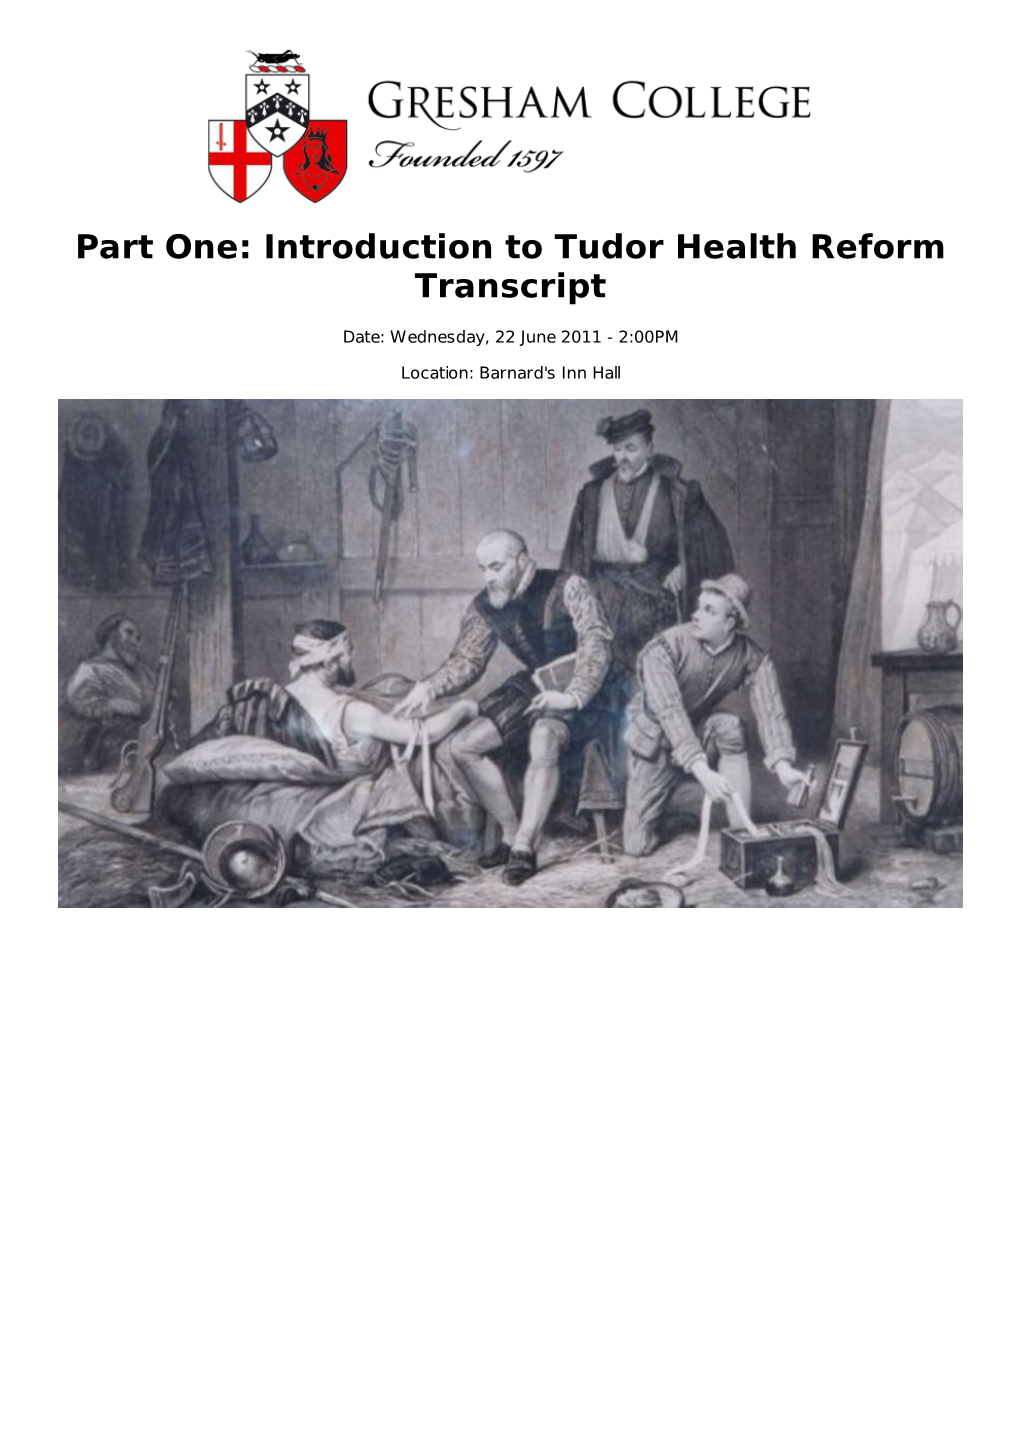 Part One: Introduction to Tudor Health Reform Transcript